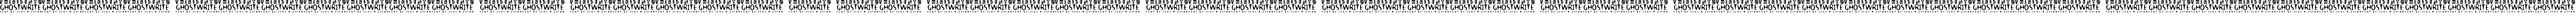 Пример написания шрифтом 13th Ghostwrite текста на украинском